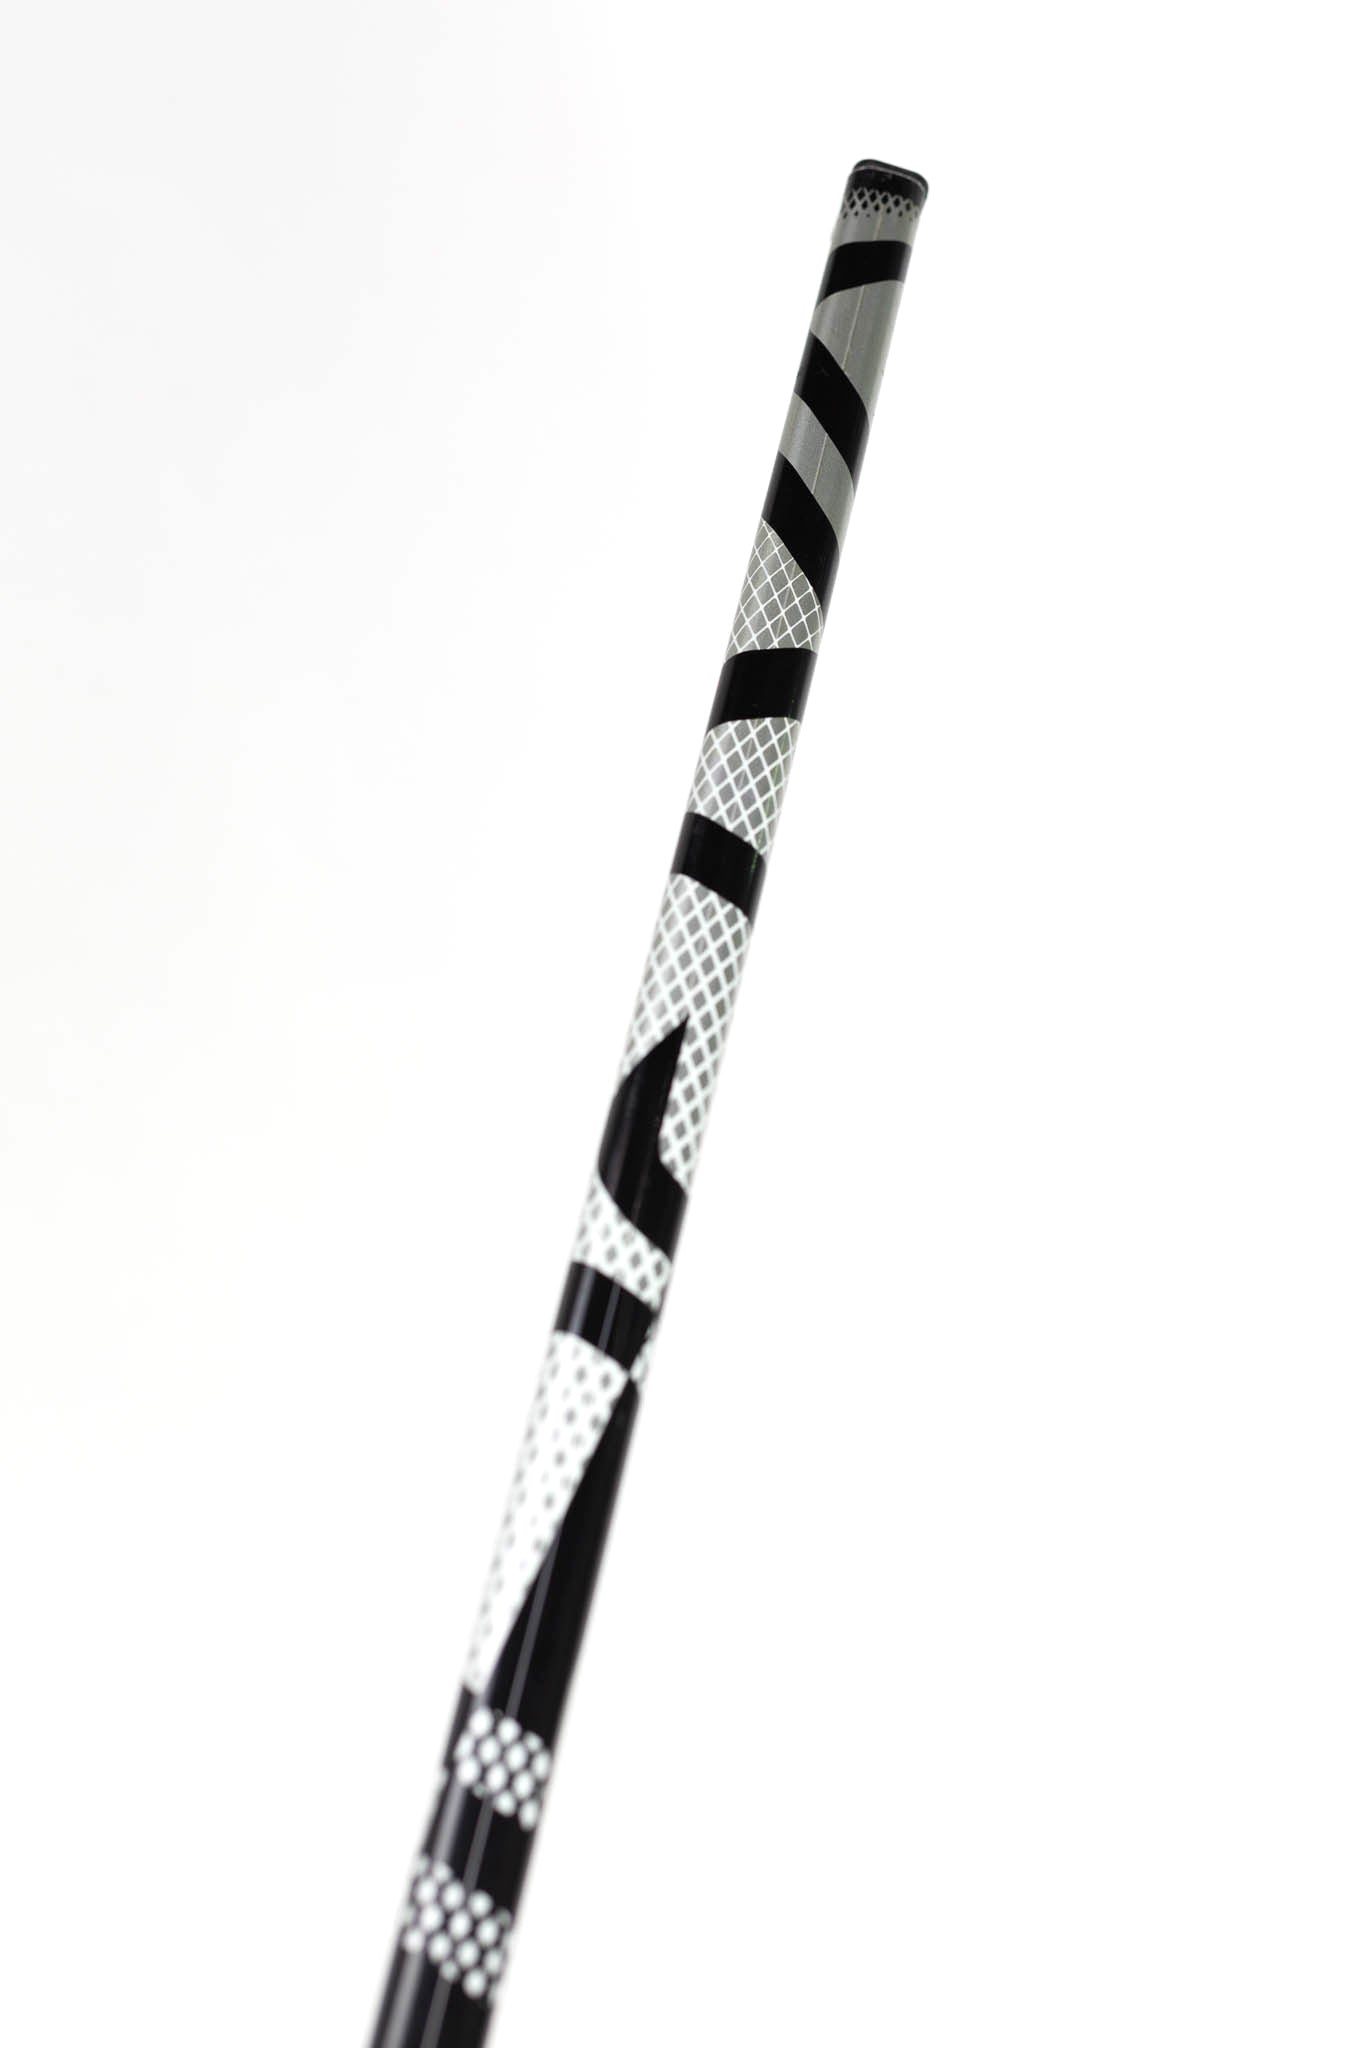 Bauer Vapor X2.5 Junior Goalie Stick